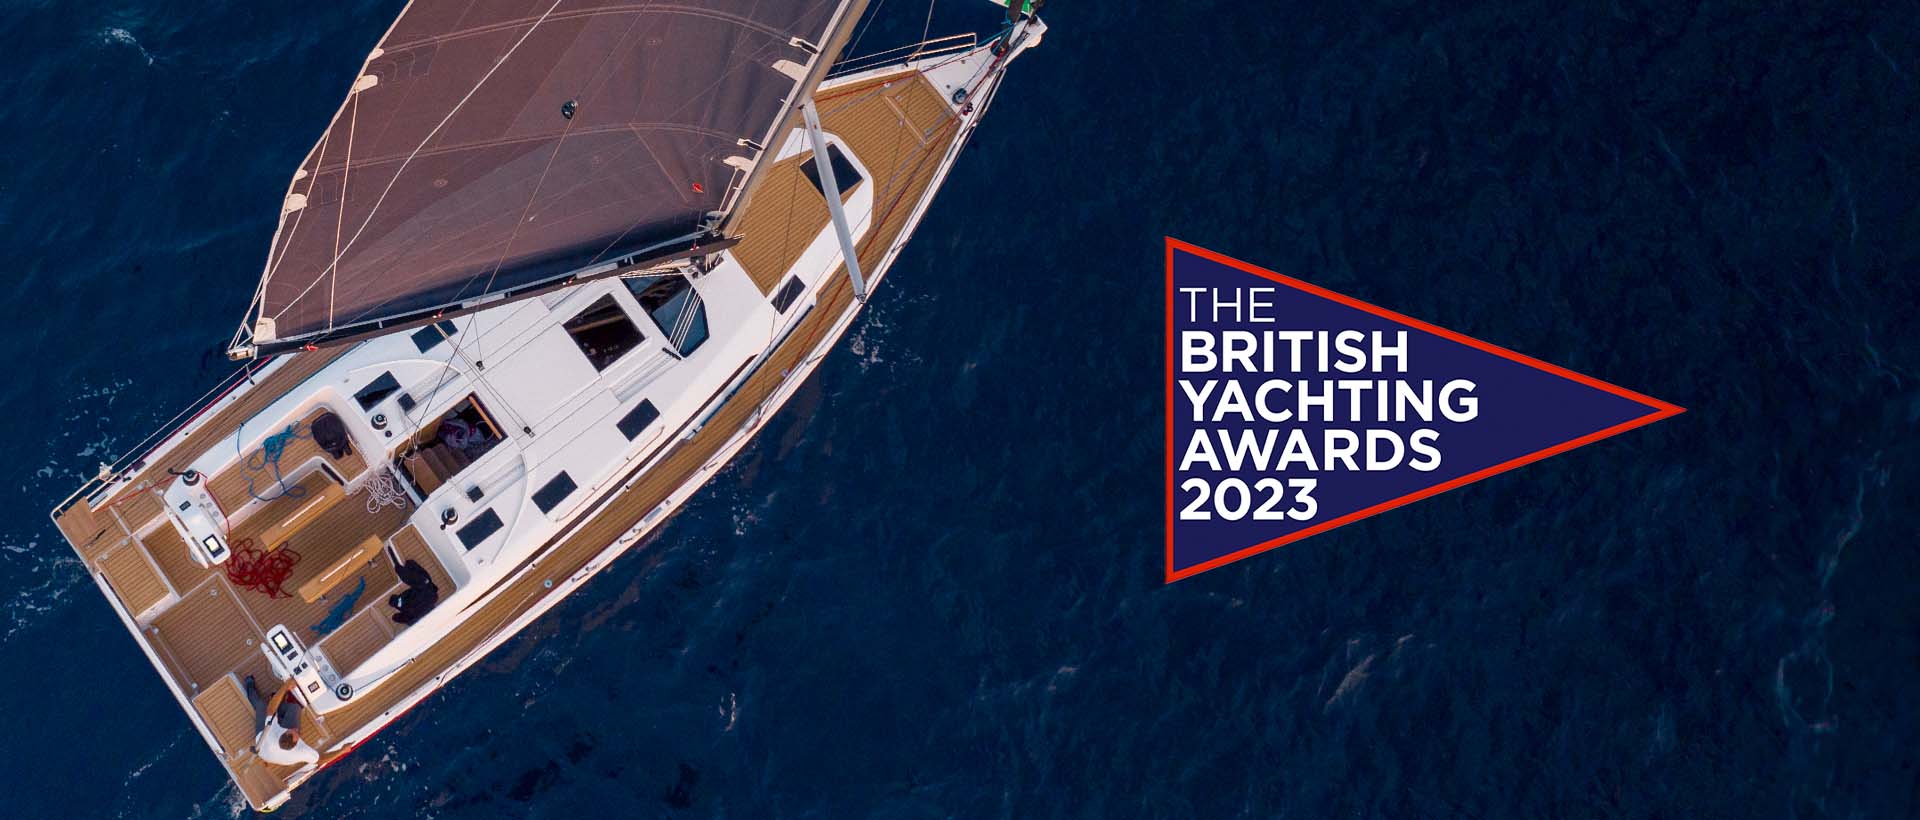 Elan Impression 43 won the British Yachting Award Nomination